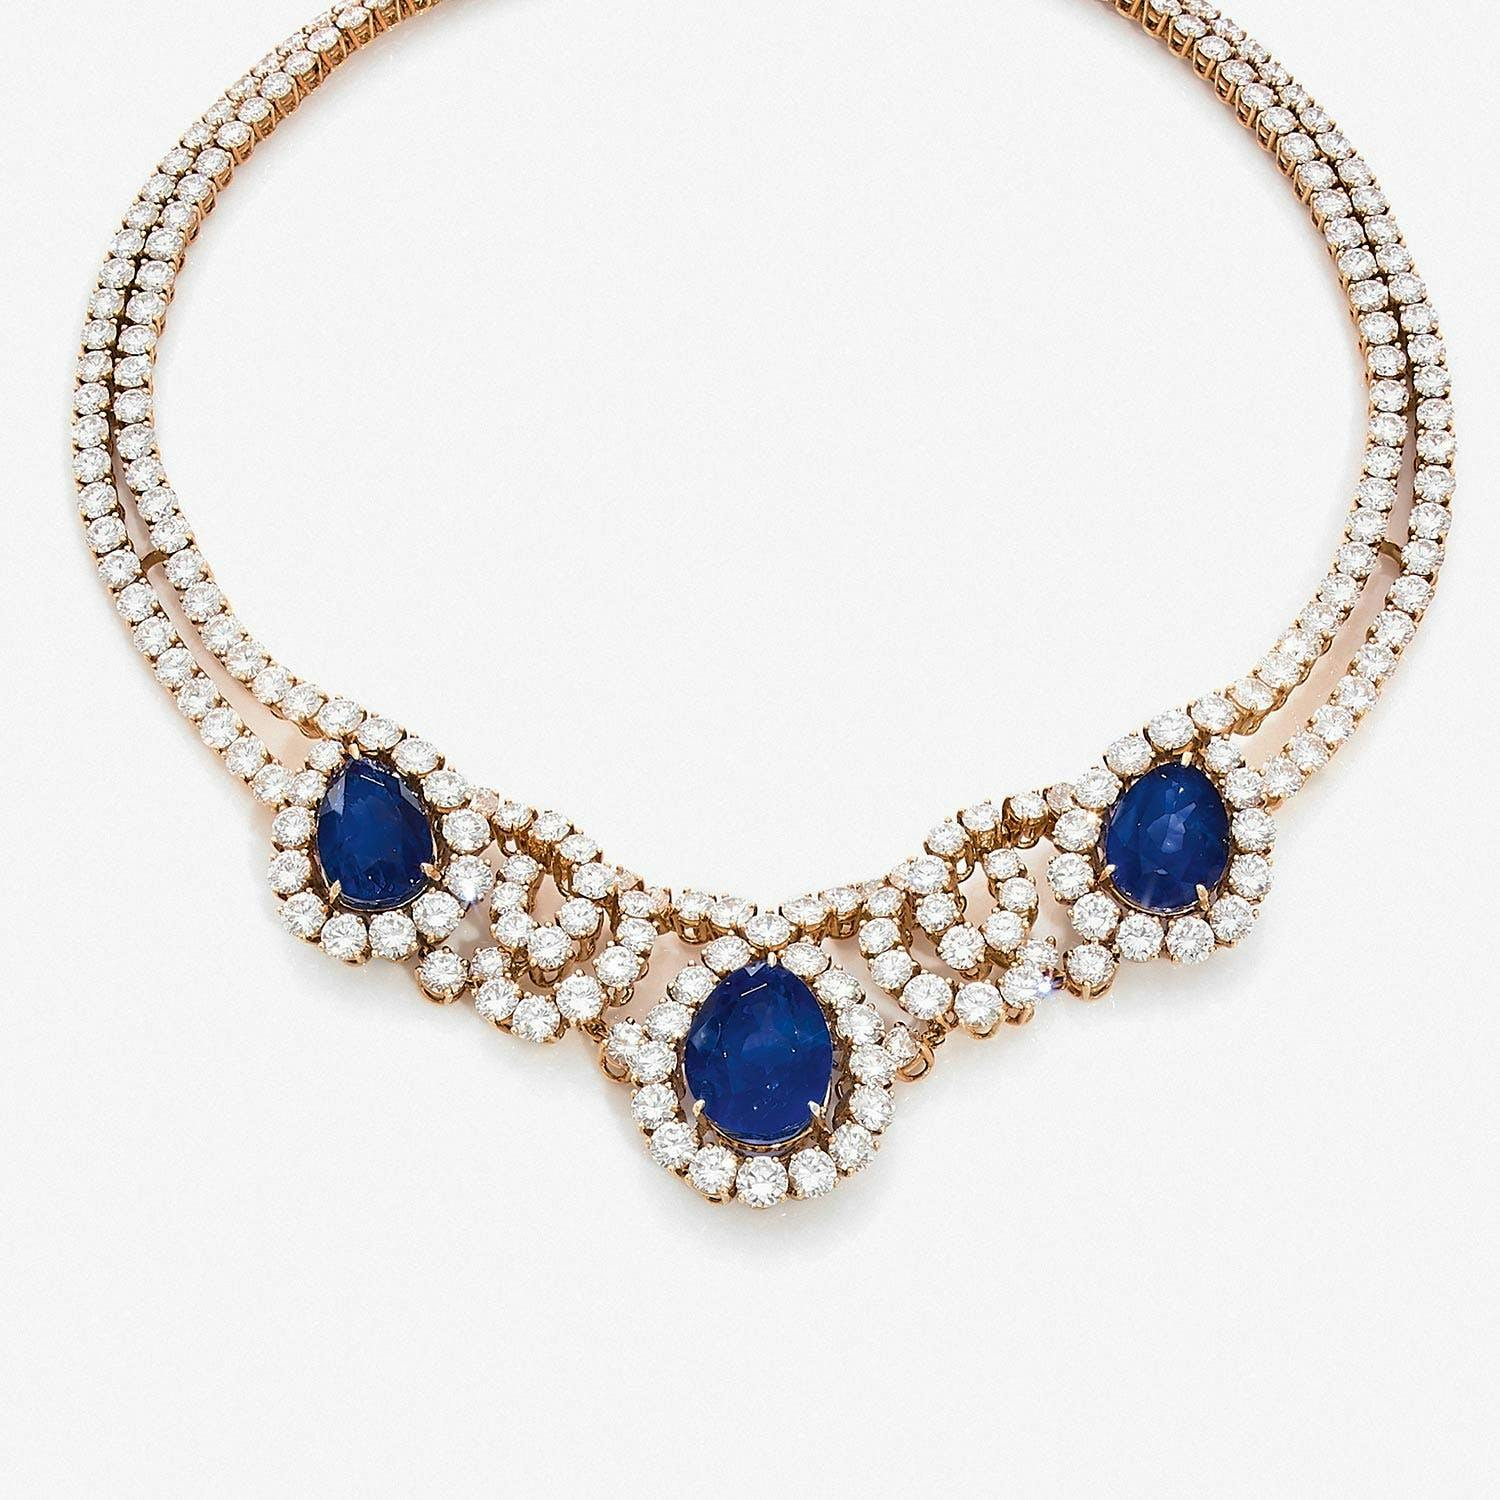 accessories accessory bracelet jewelry necklace